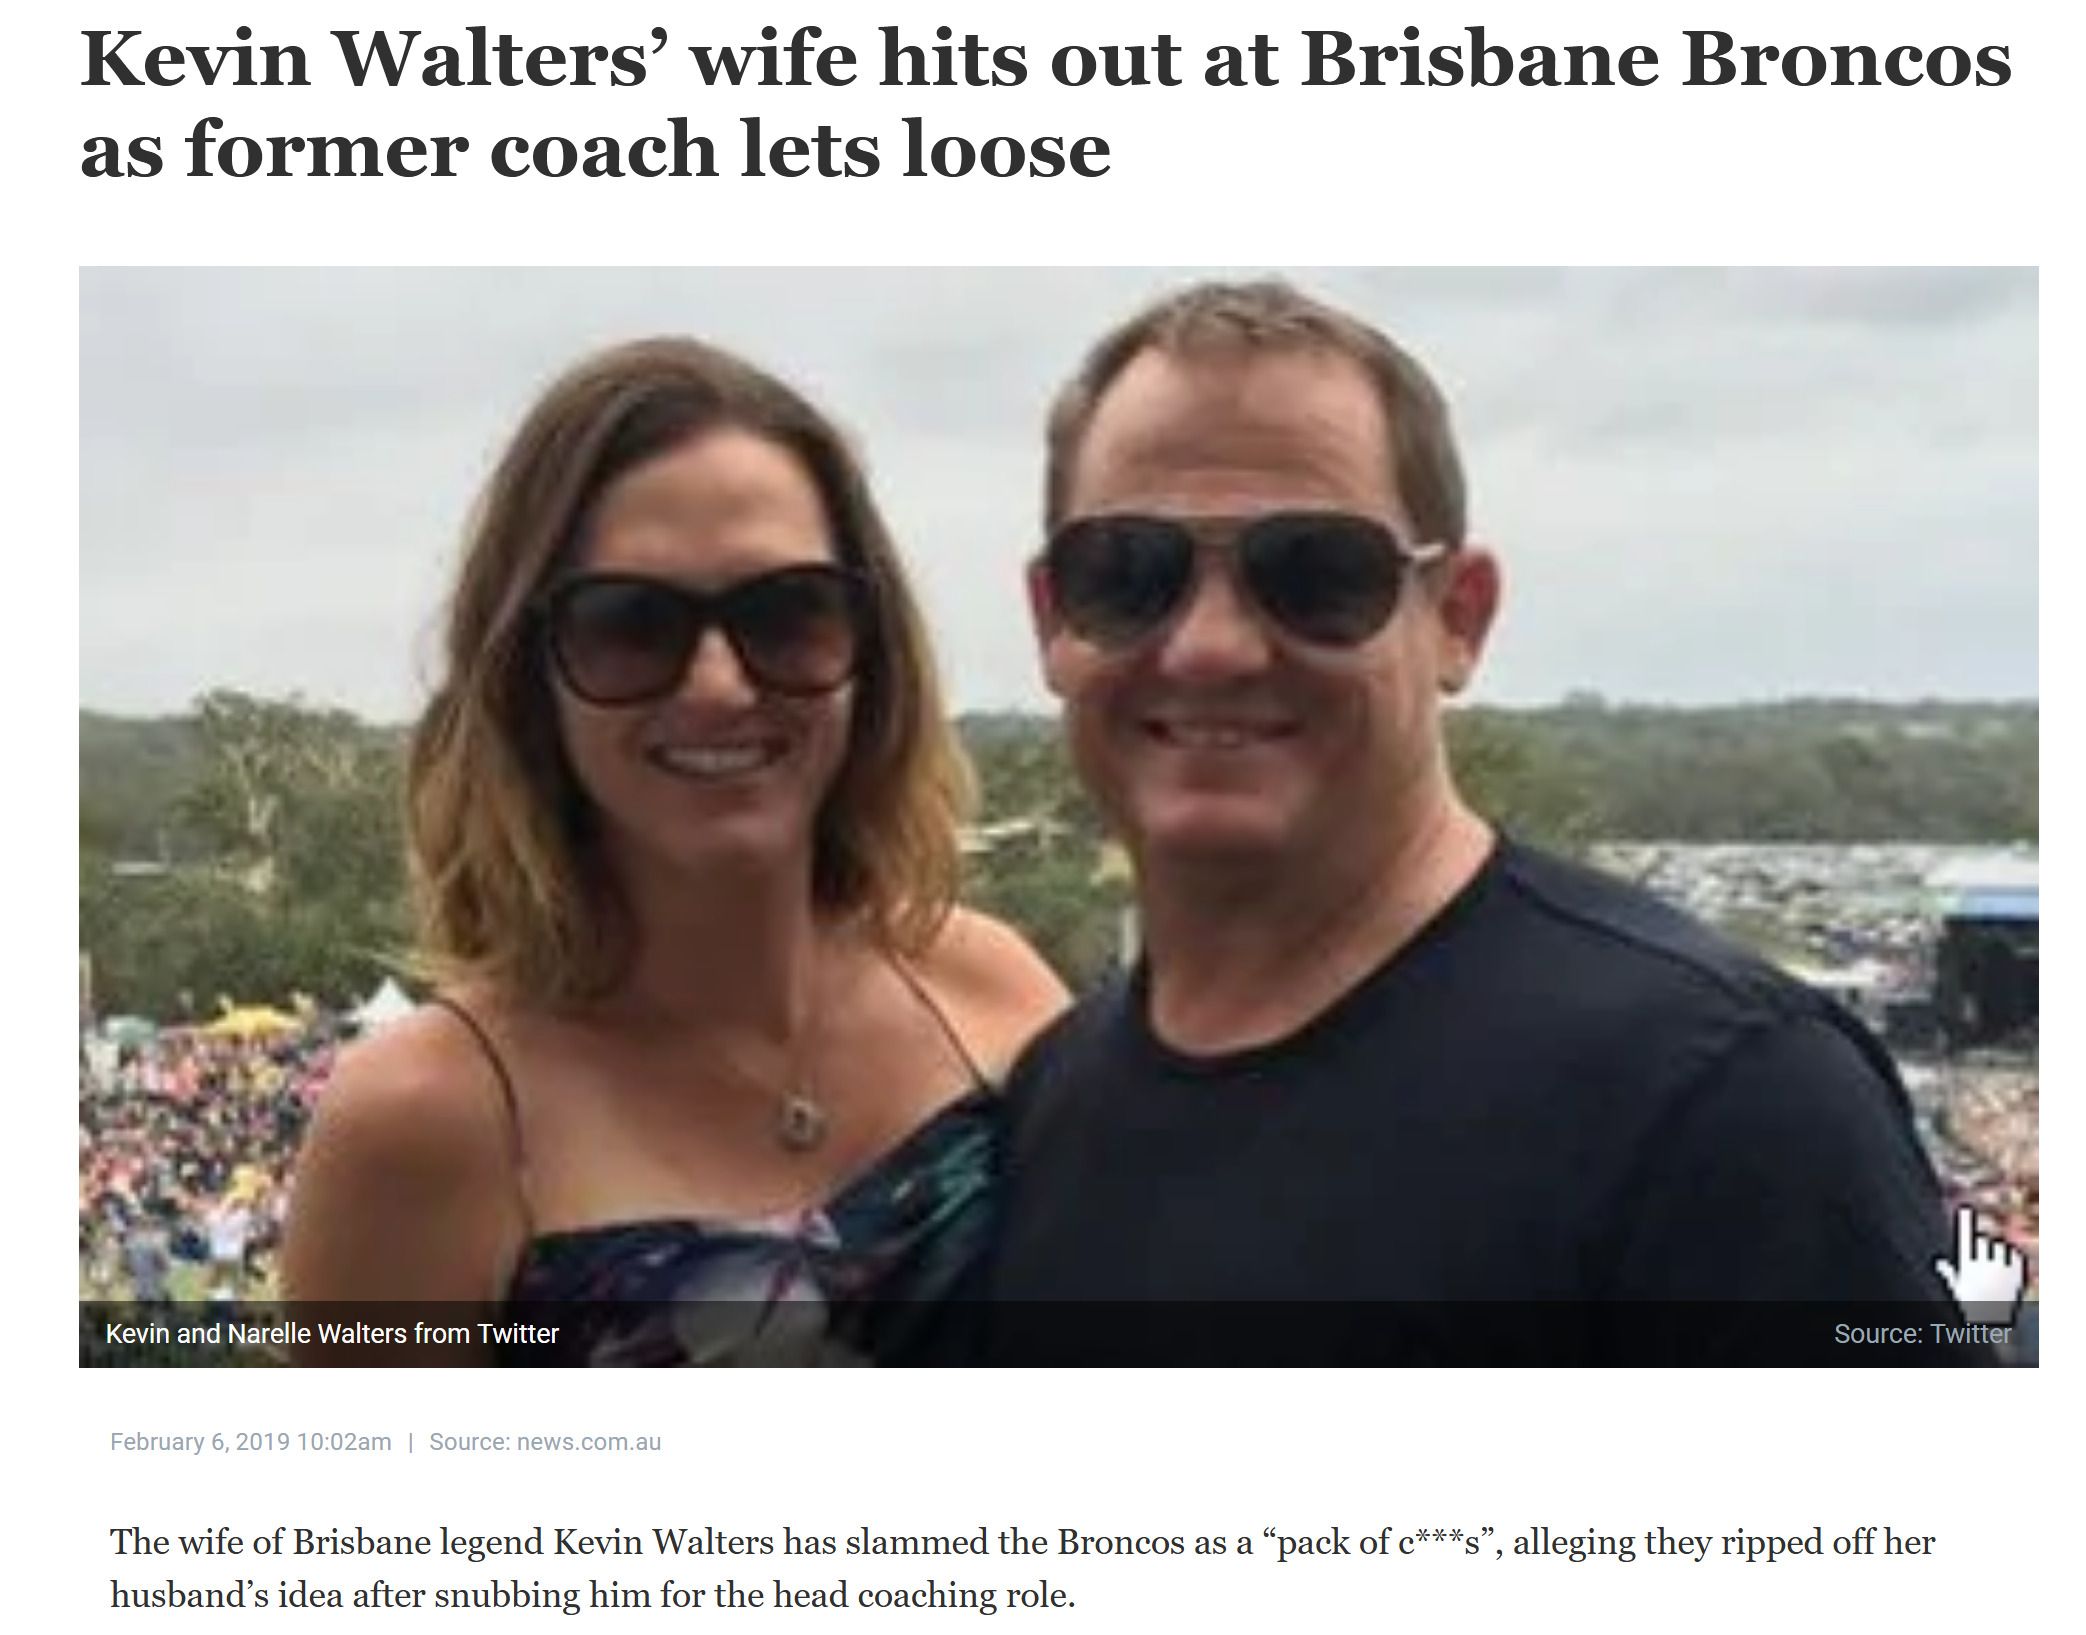 Kevin Walters wife Narelle slams Brisbane Broncos as pack of c s